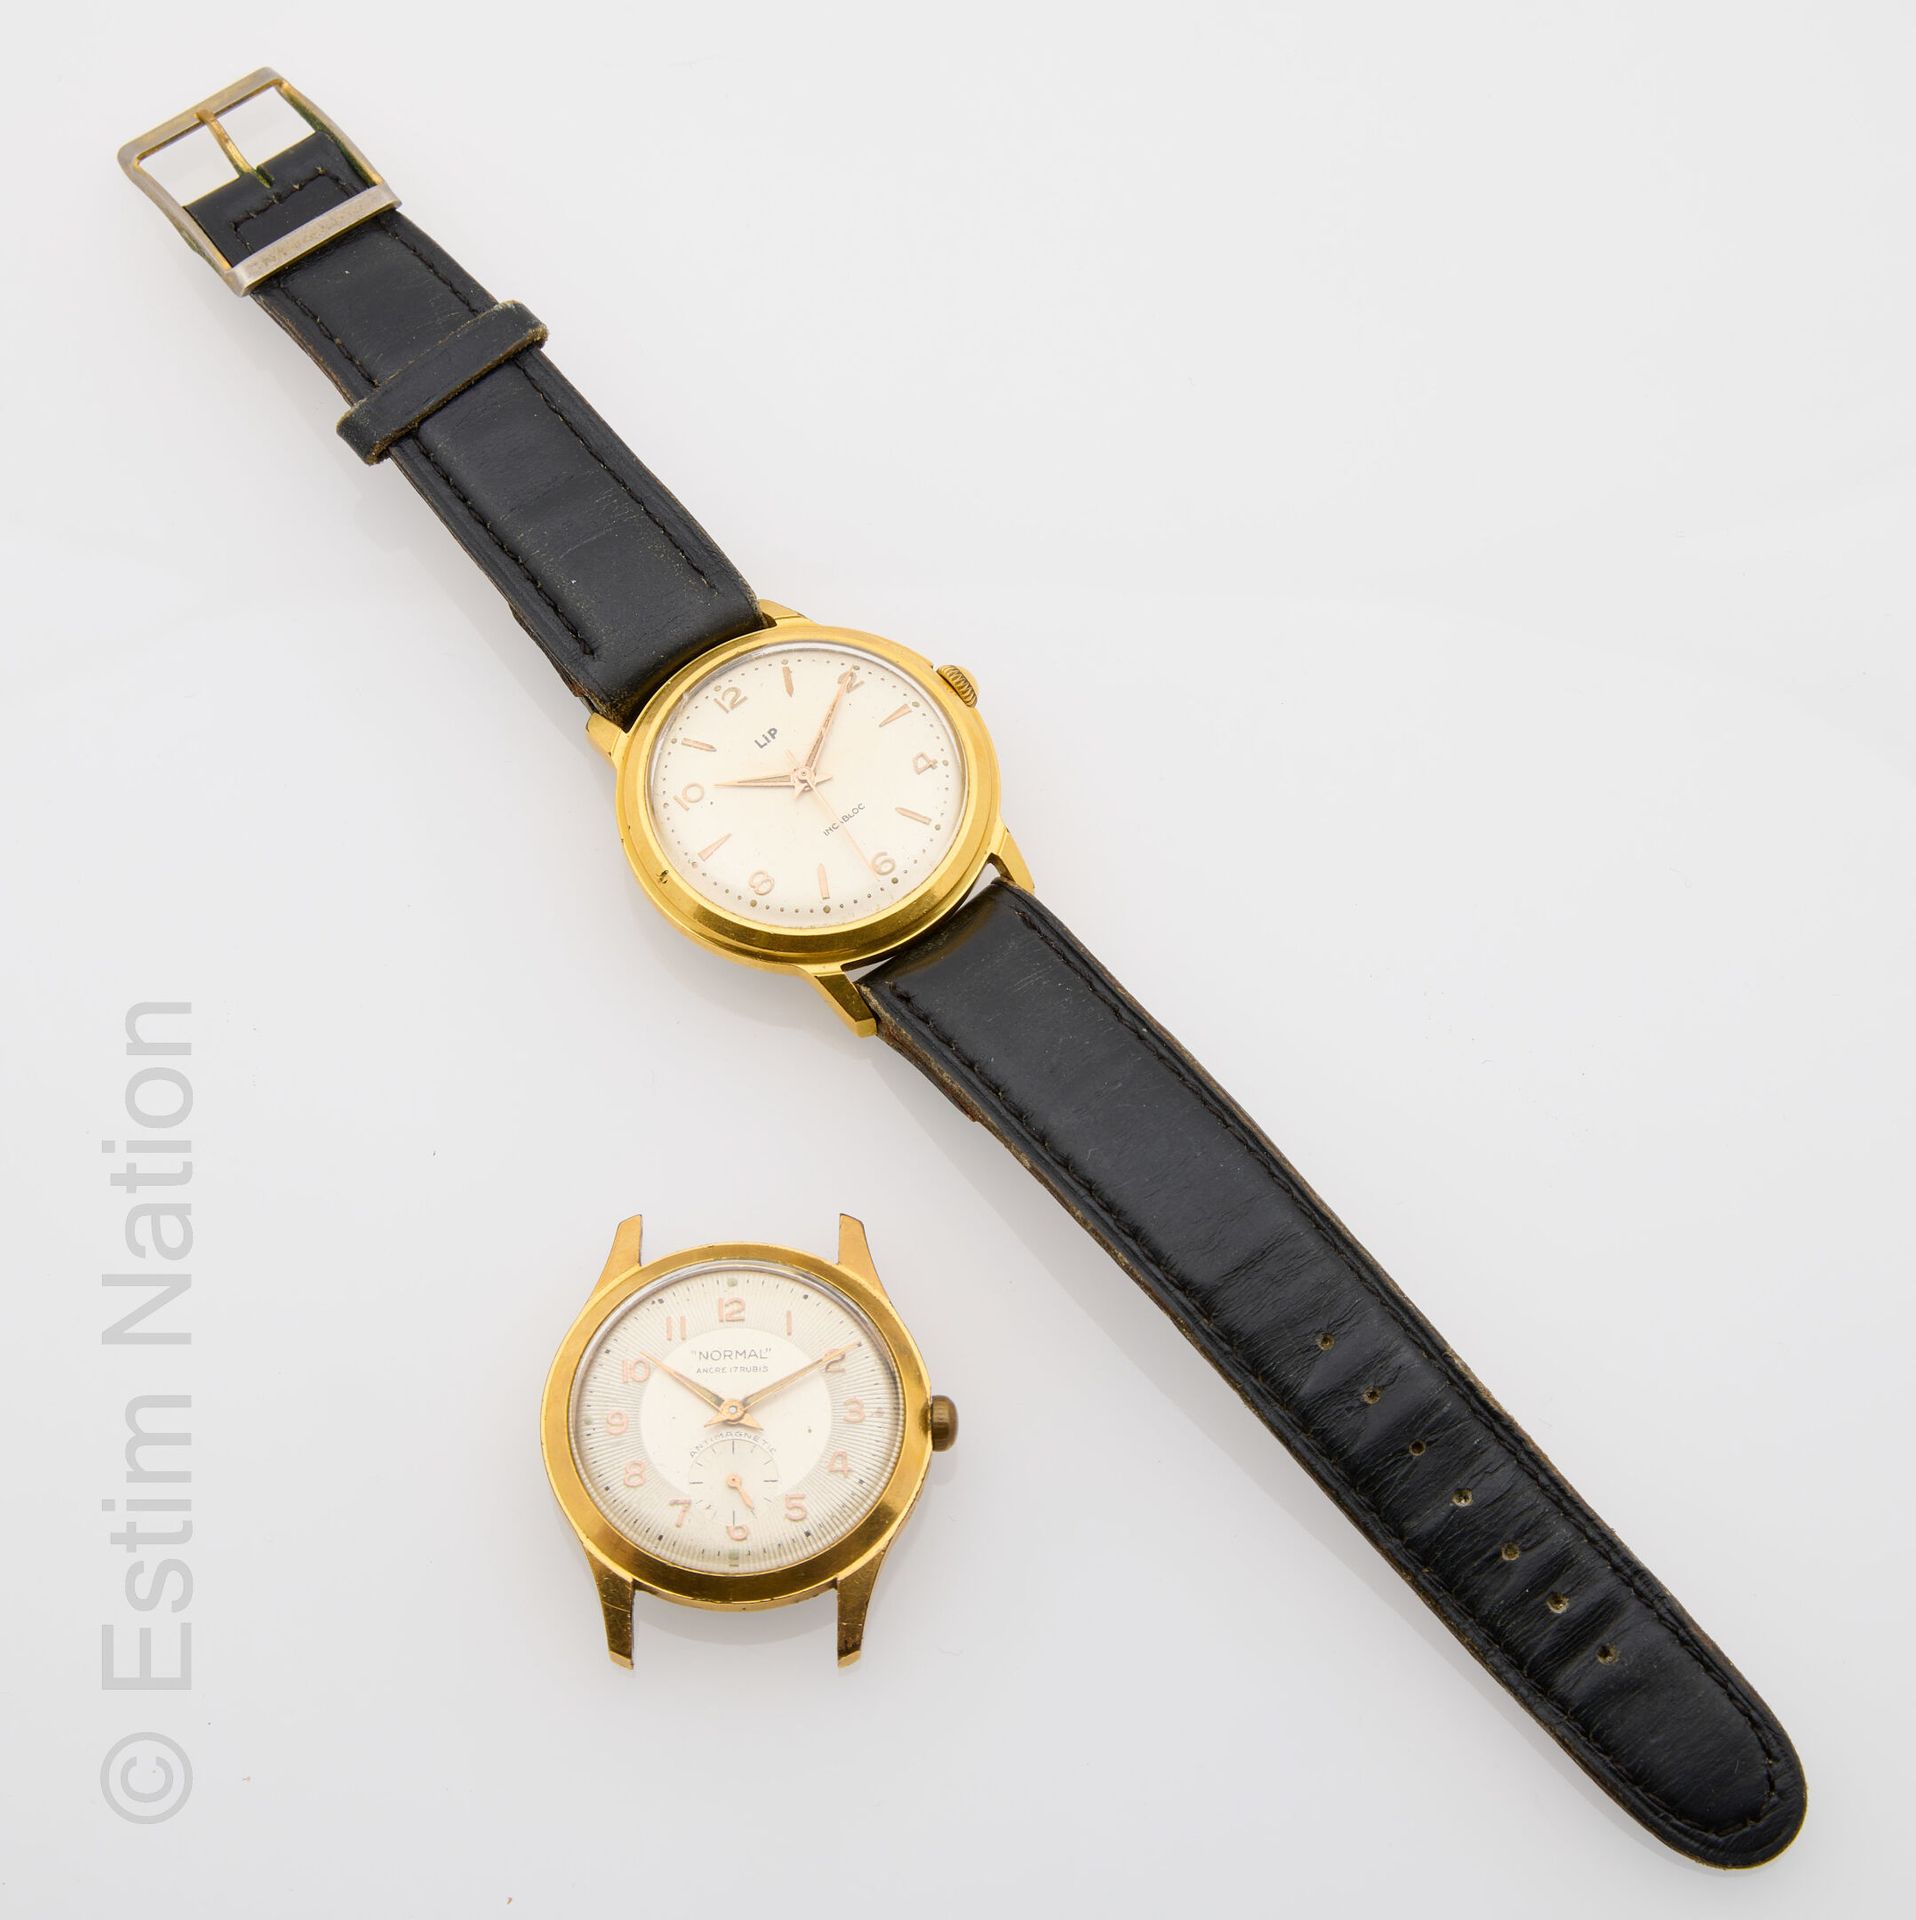 LOT DE MONTRES 一套城市手表包括:
- 一块镀金的LIP手表，圆形表壳，银色表盘，阿拉伯数字，黑色皮表带。
- 一块镀金的 "Normal "手表&hellip;